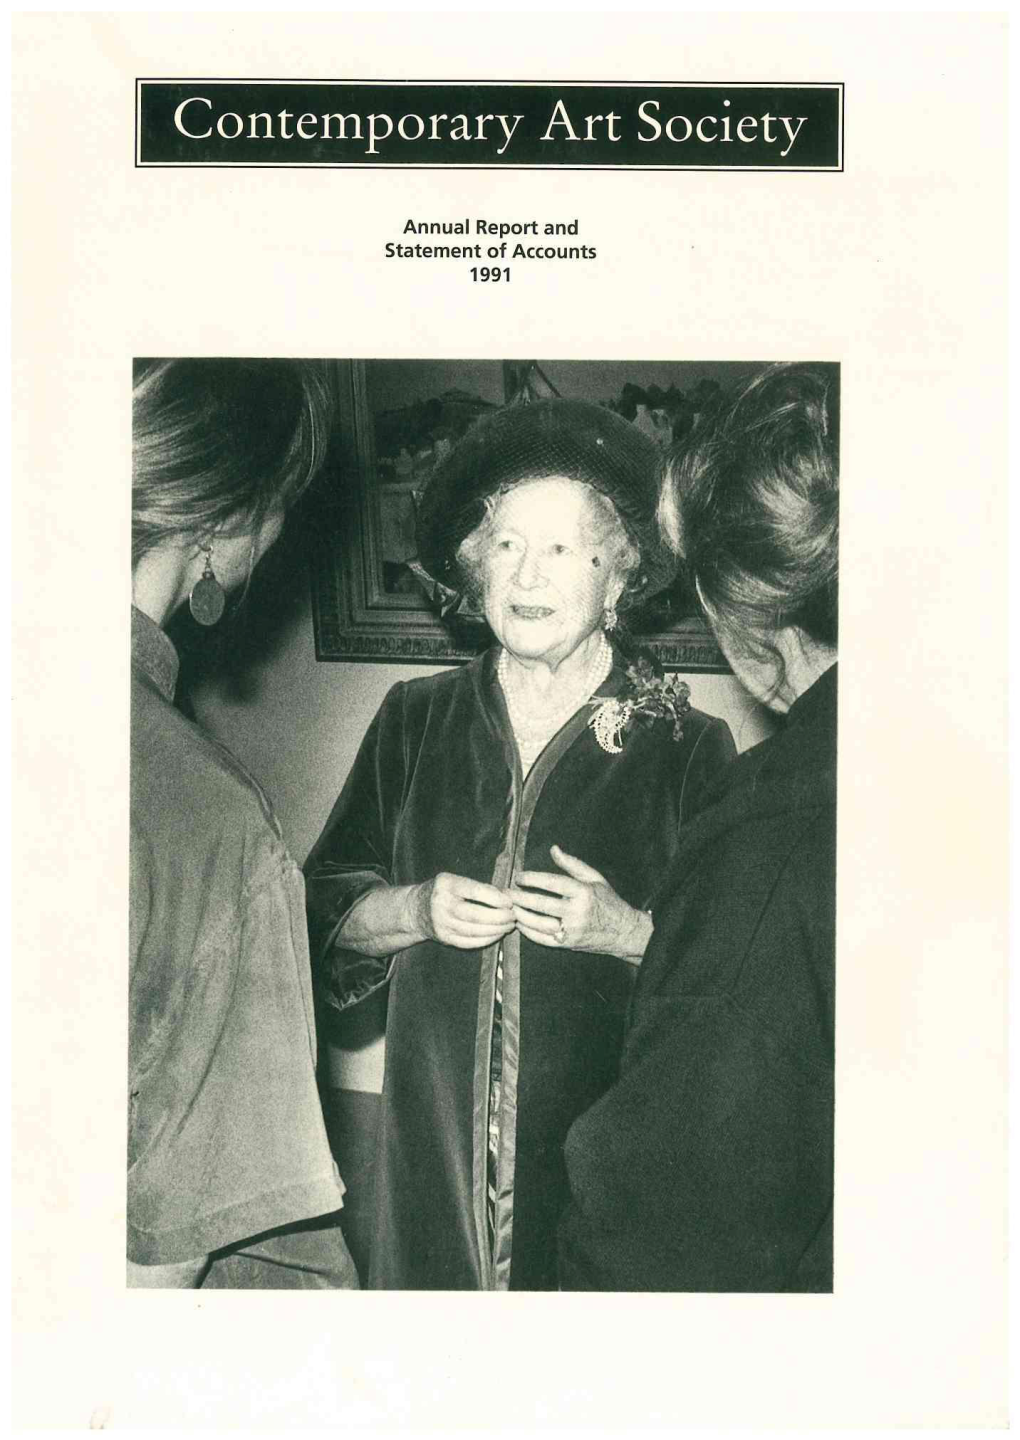 Contemporary Art Society Annual Report 1991